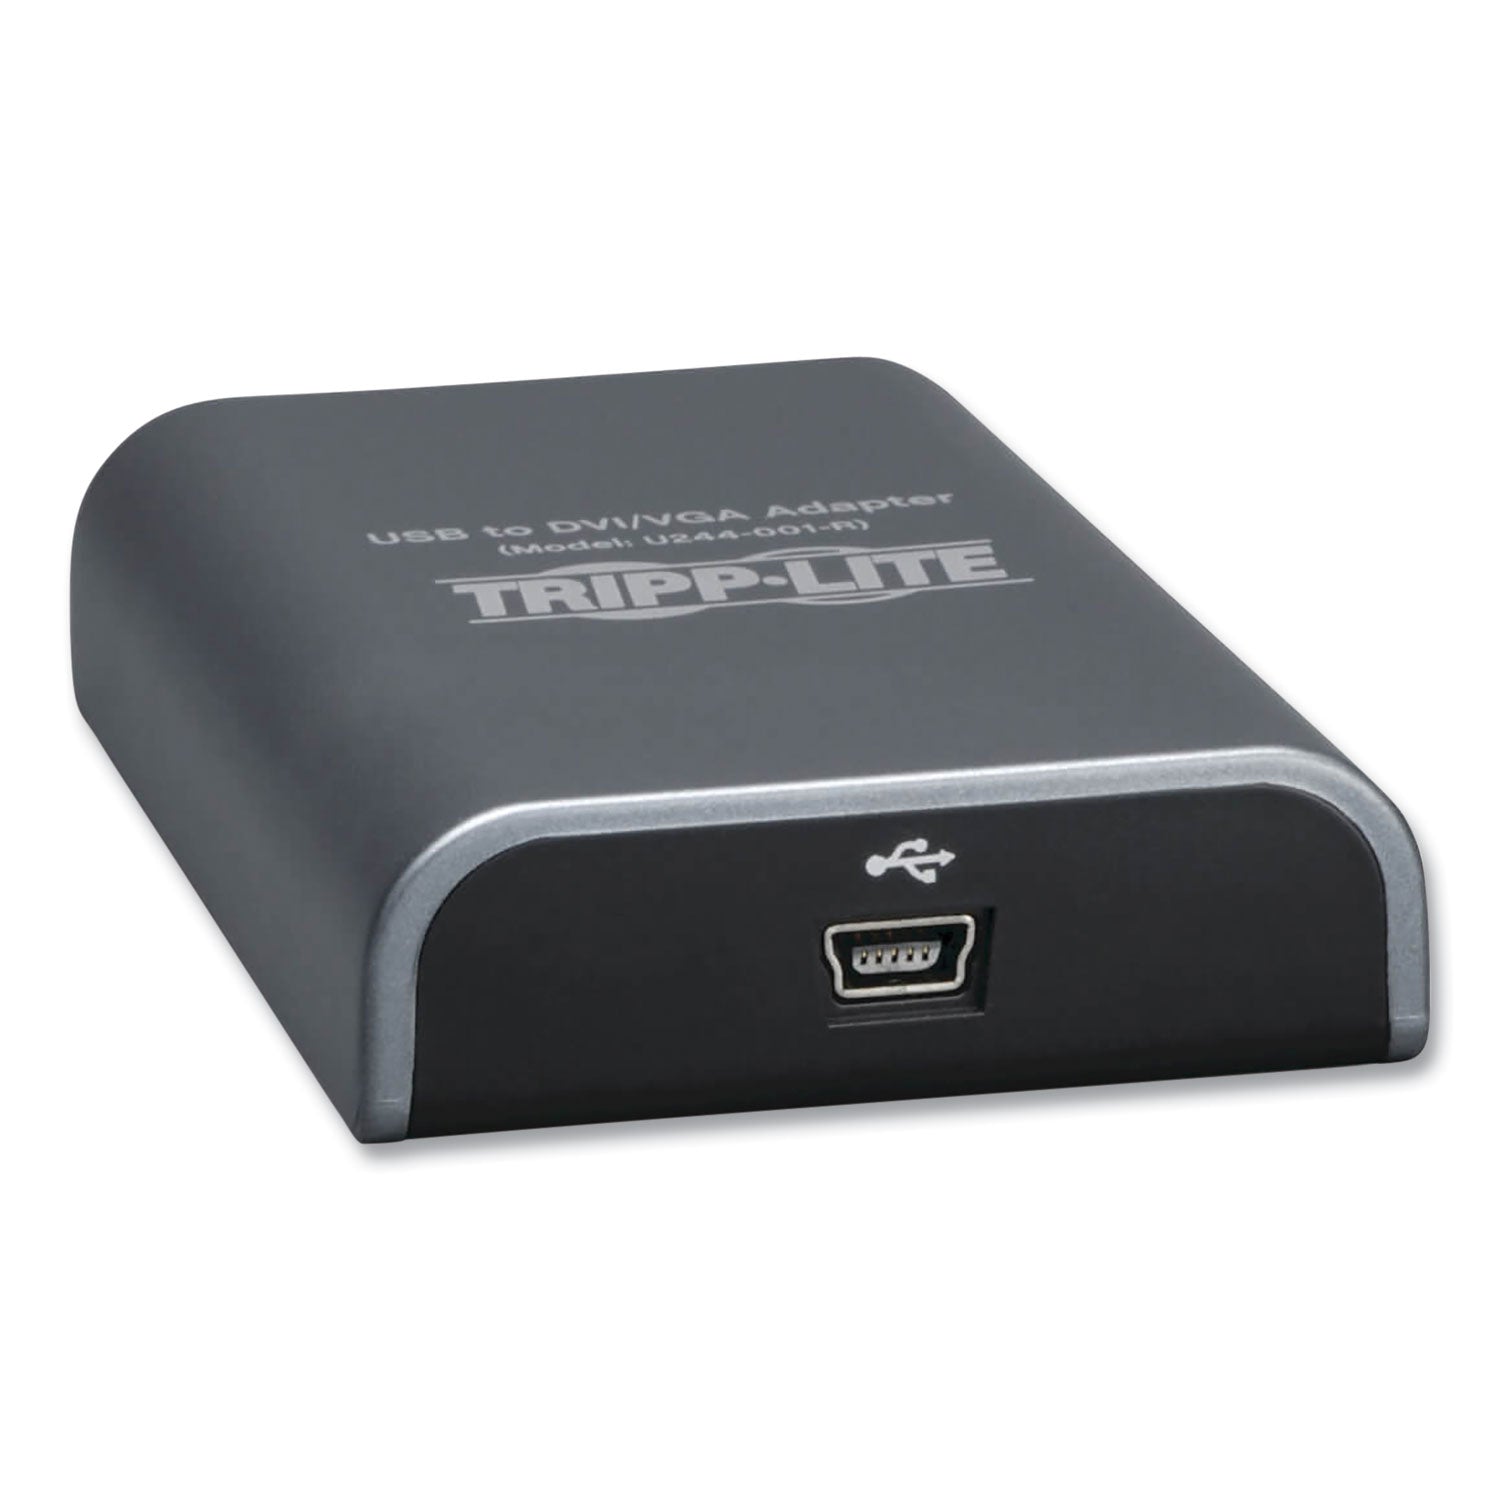 USB 2.0 to DVI/VGA External Multi-Monitor Video Card, 128 MB SDRAM, 4", Black - 